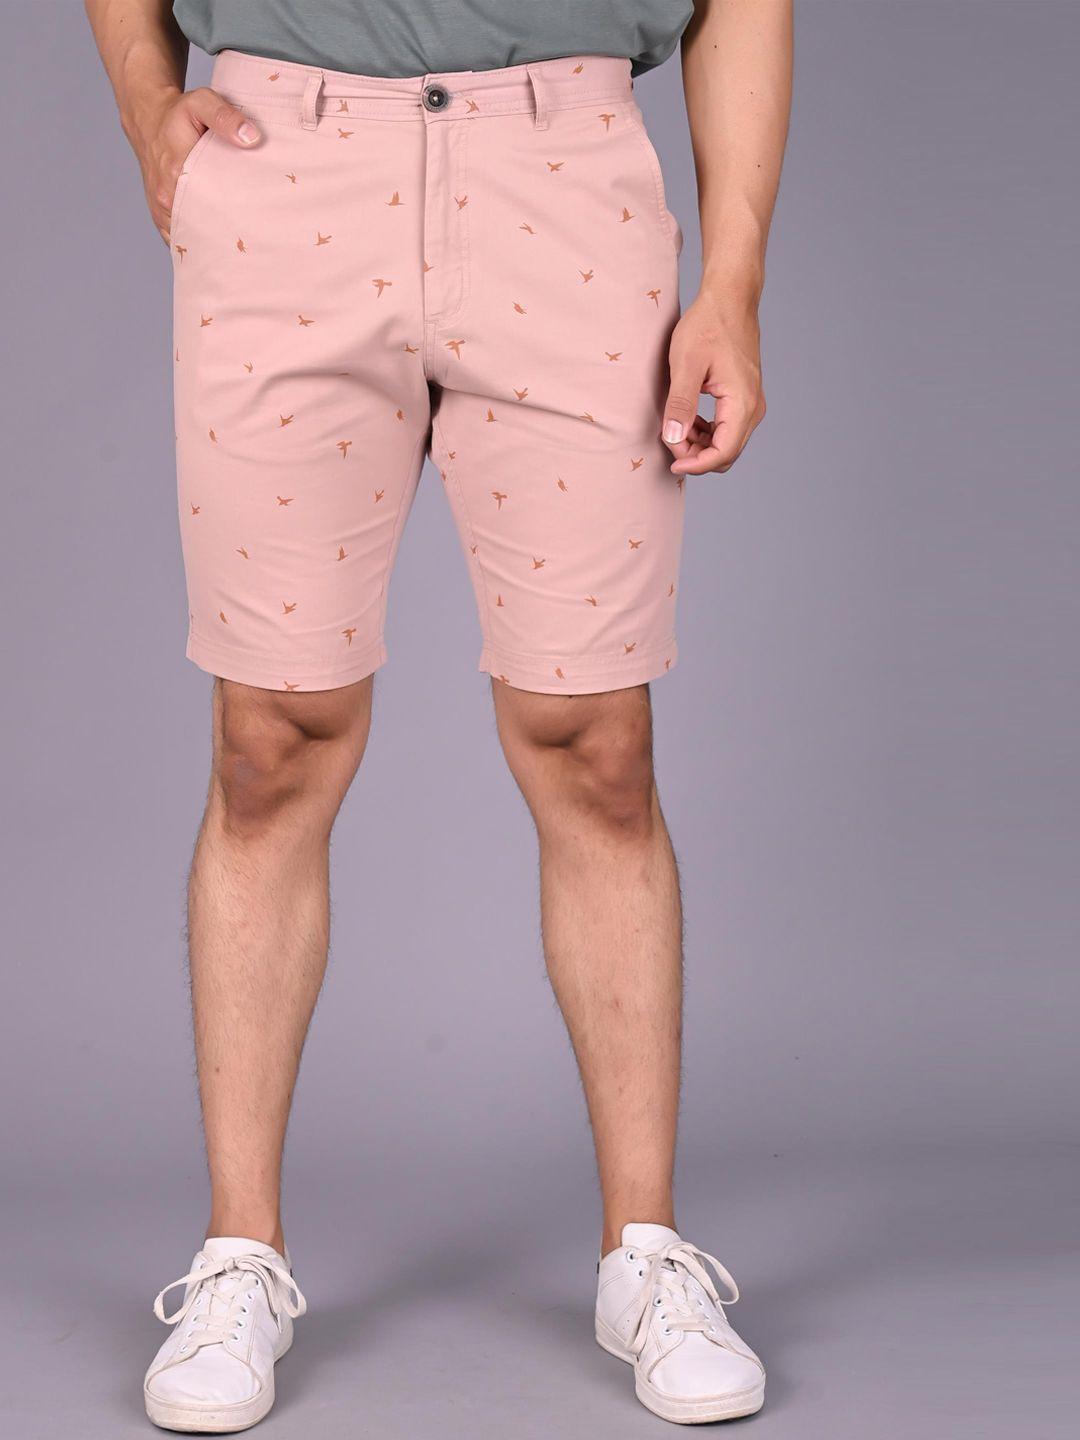 aristitch men conversational printed mid-rise cotton sports shorts